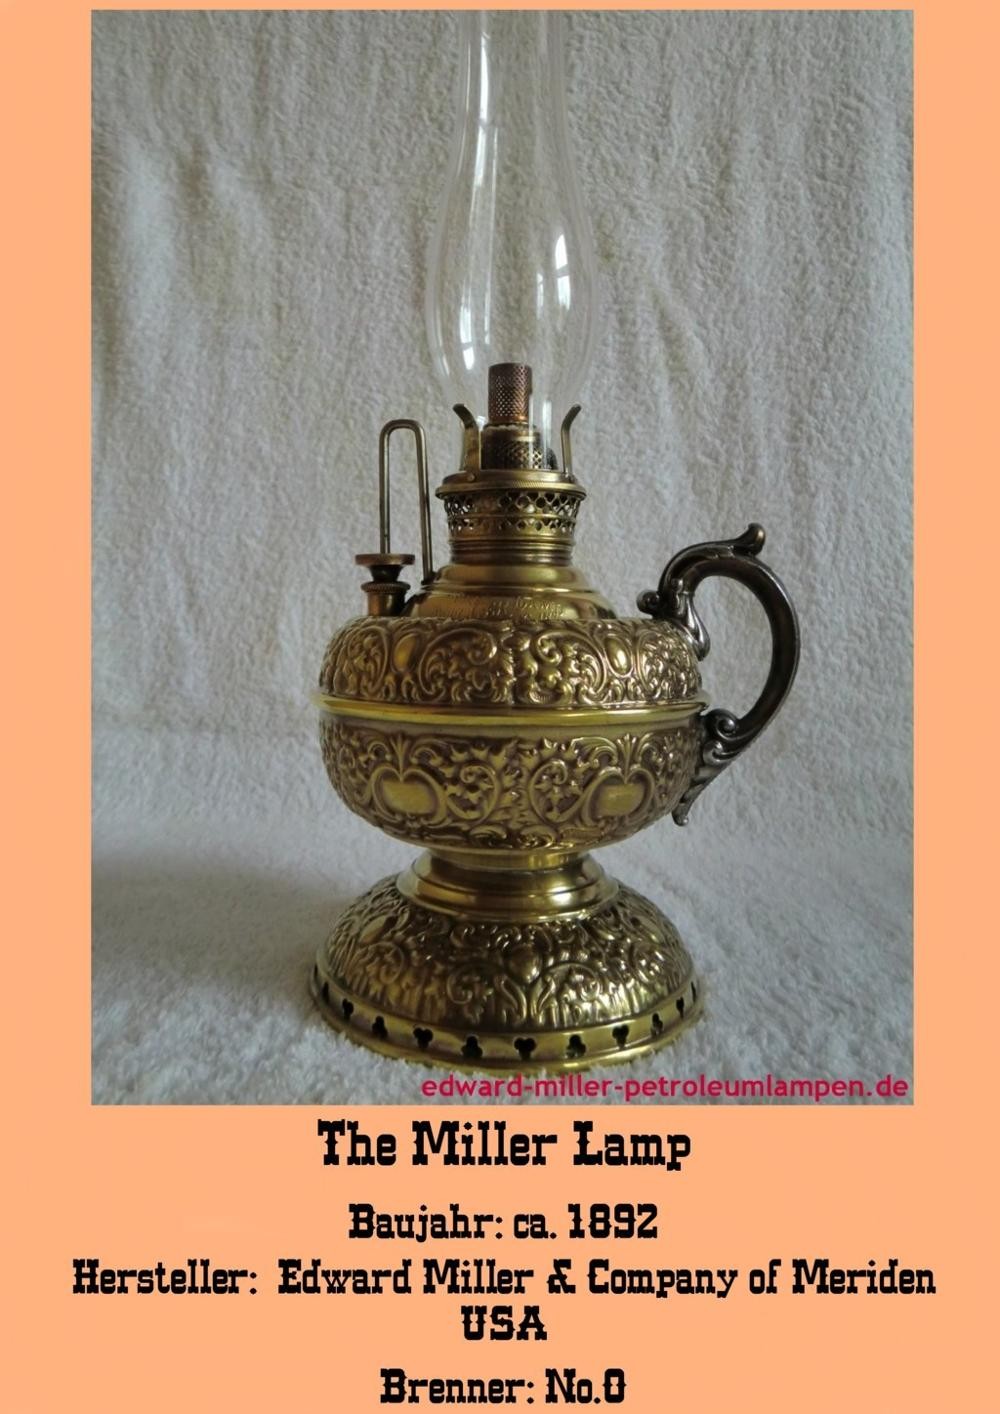 Edward Miller & Co. Lamp